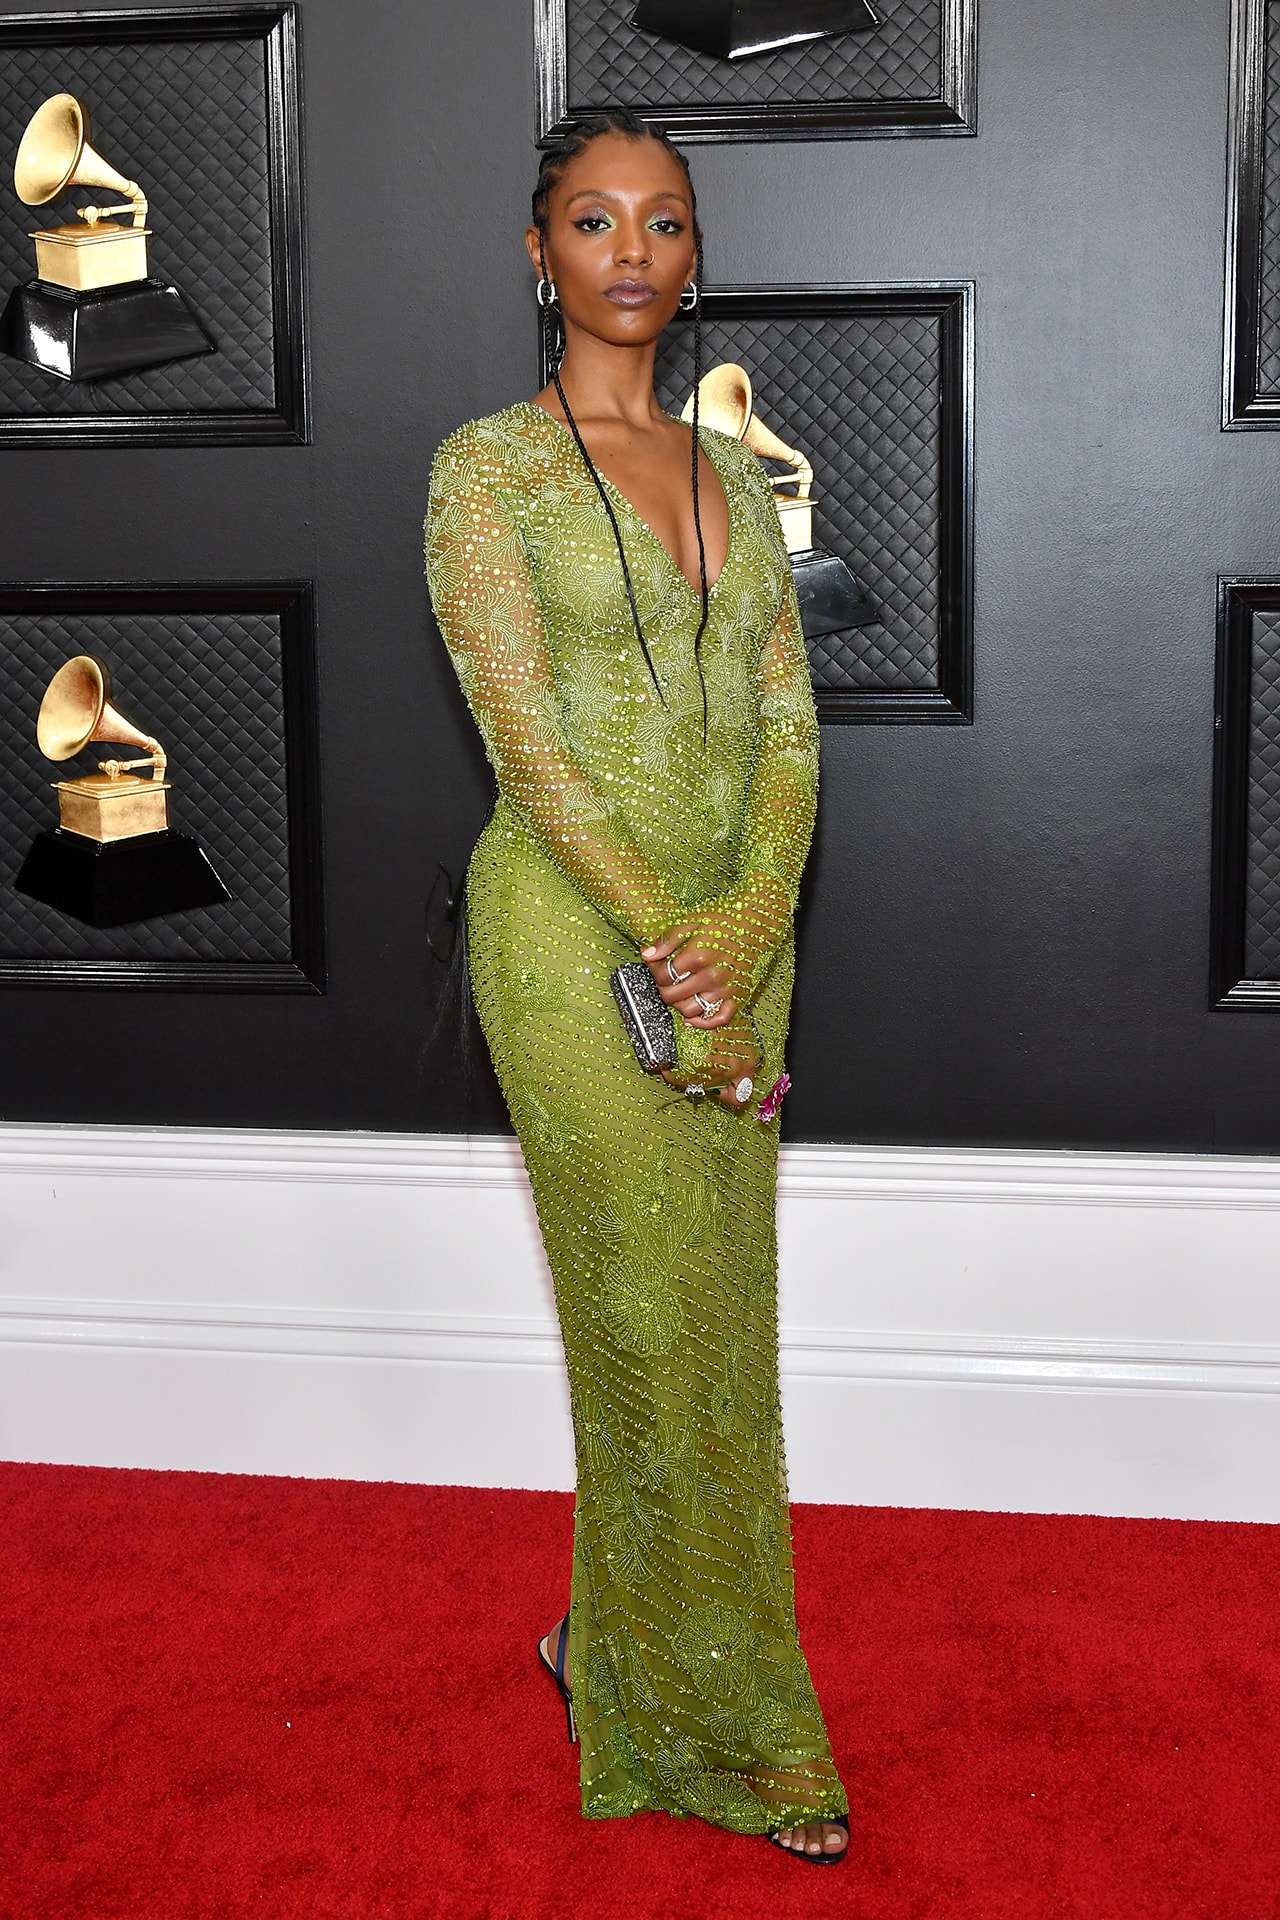 Mereba Green Dress 62nd Grammy Awards 2020 Red Carpet